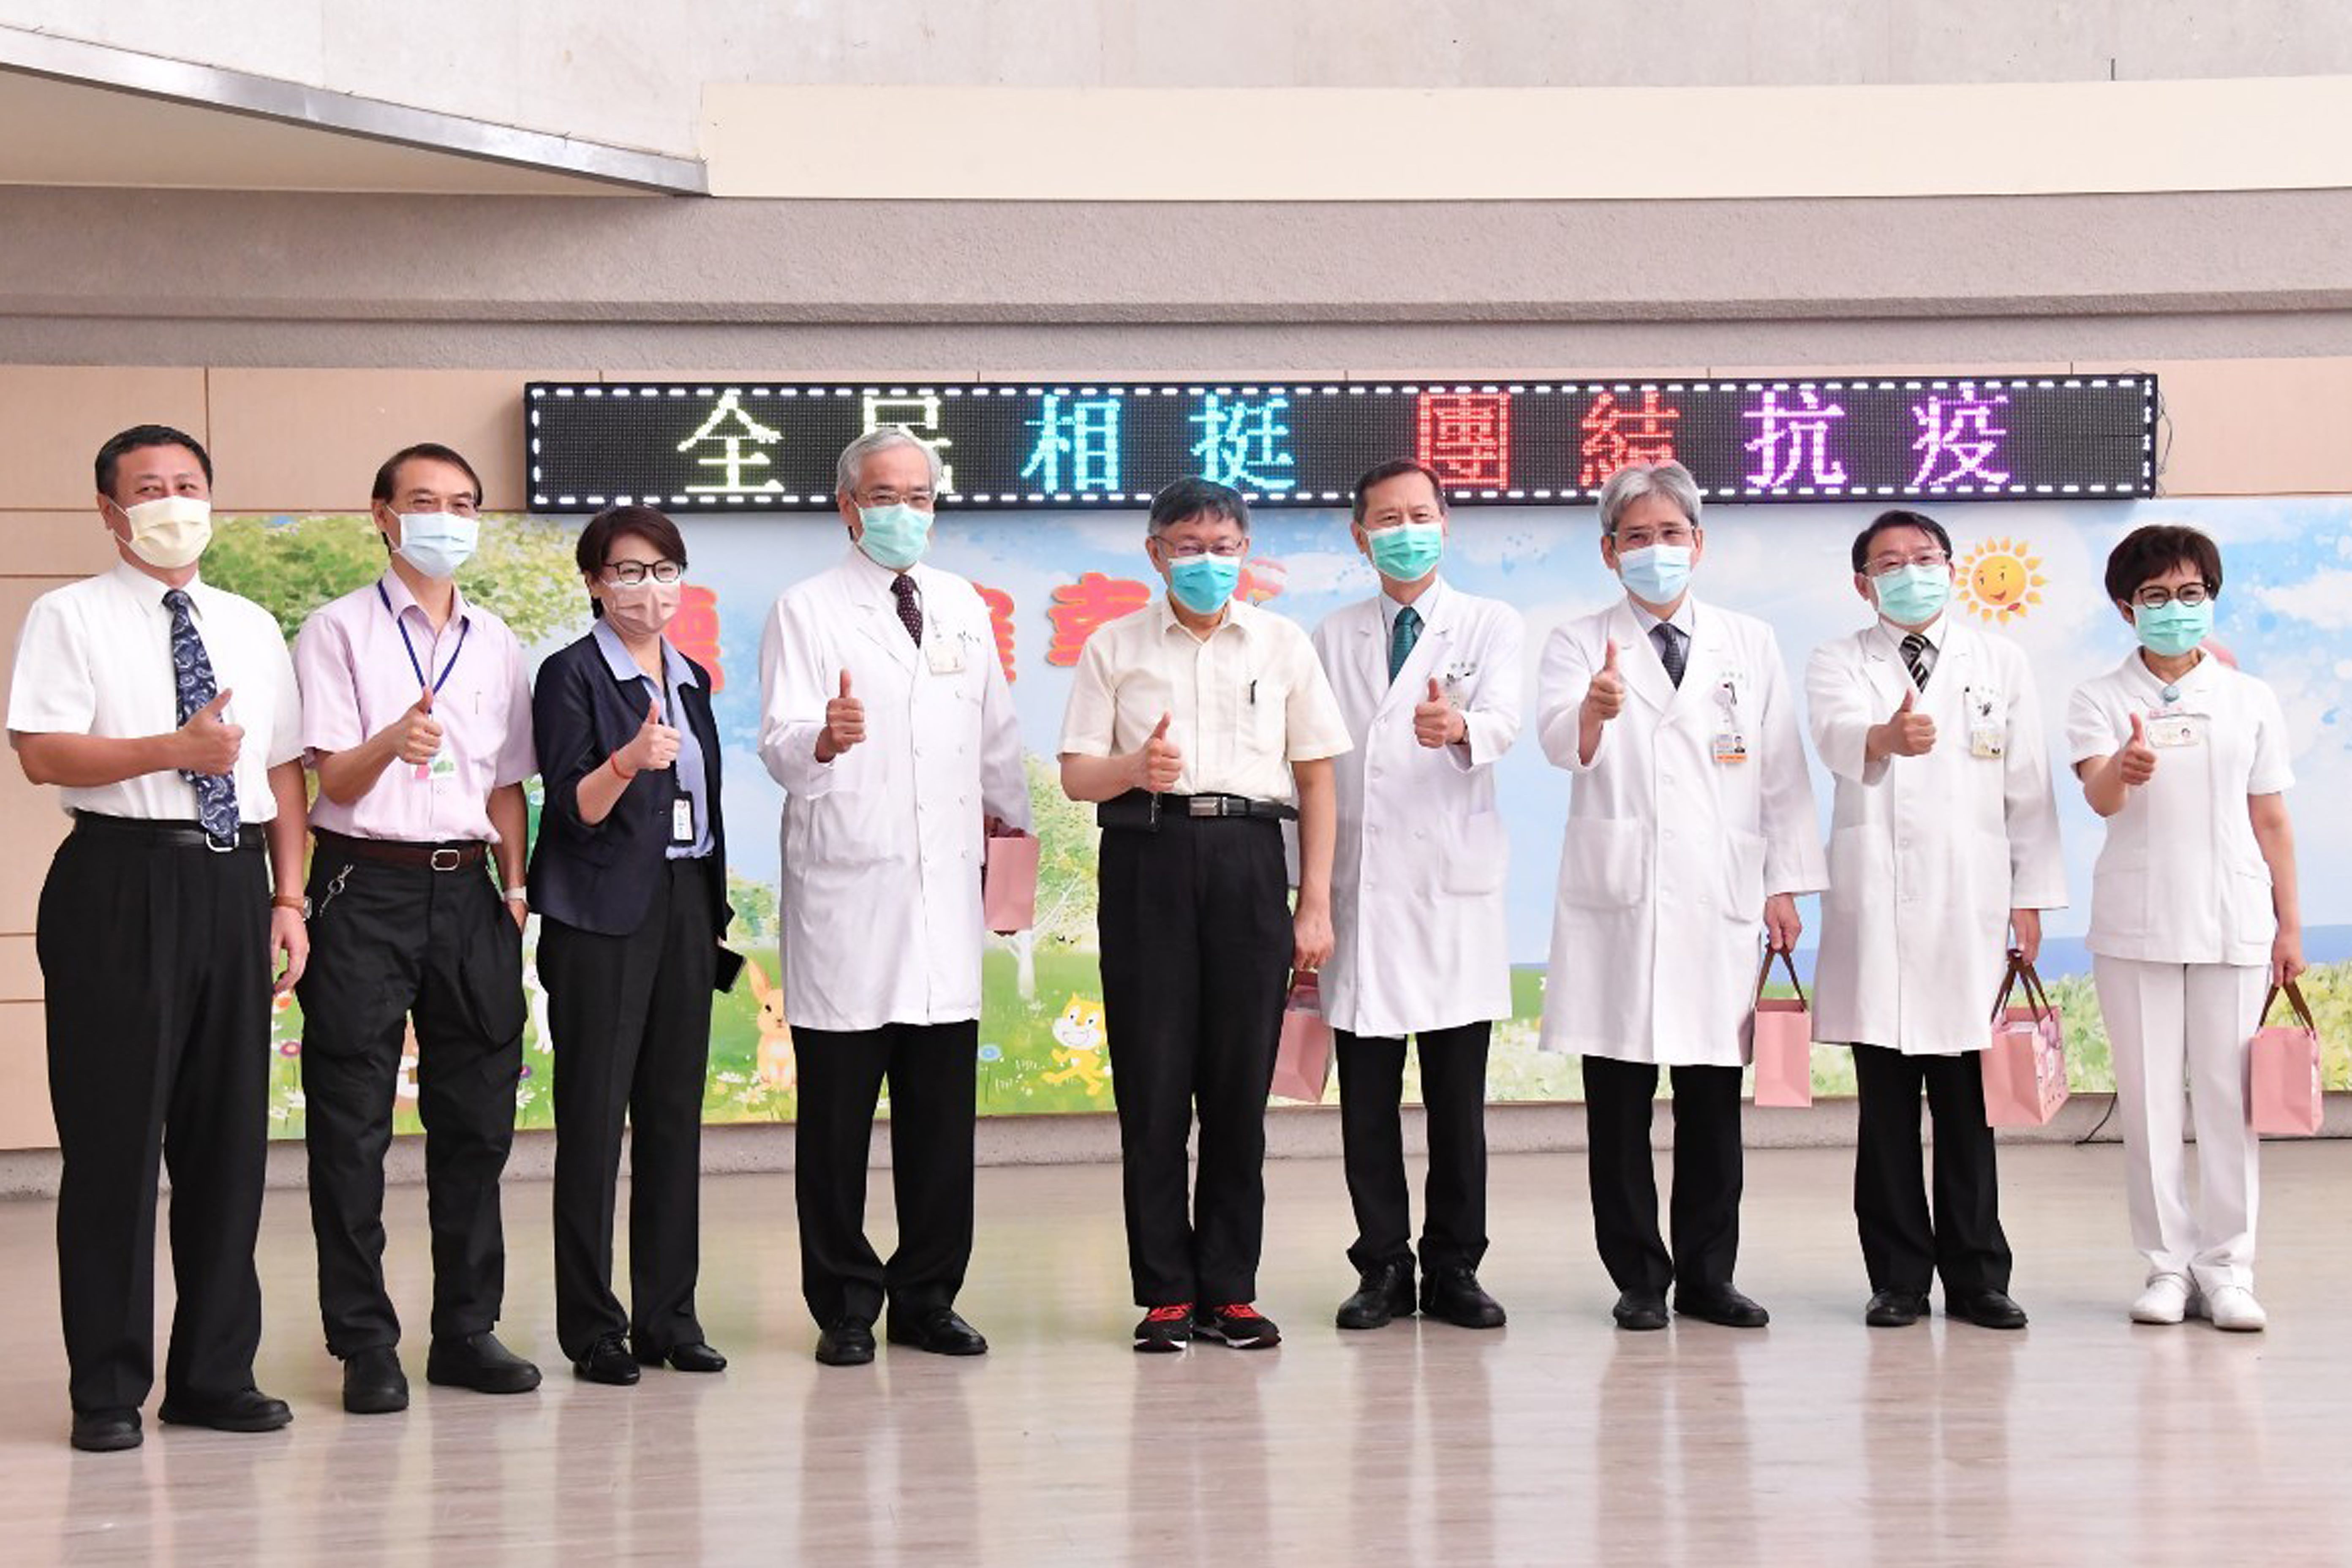 Mayor Ko with staff members of the Taipei Veterans General Hospital